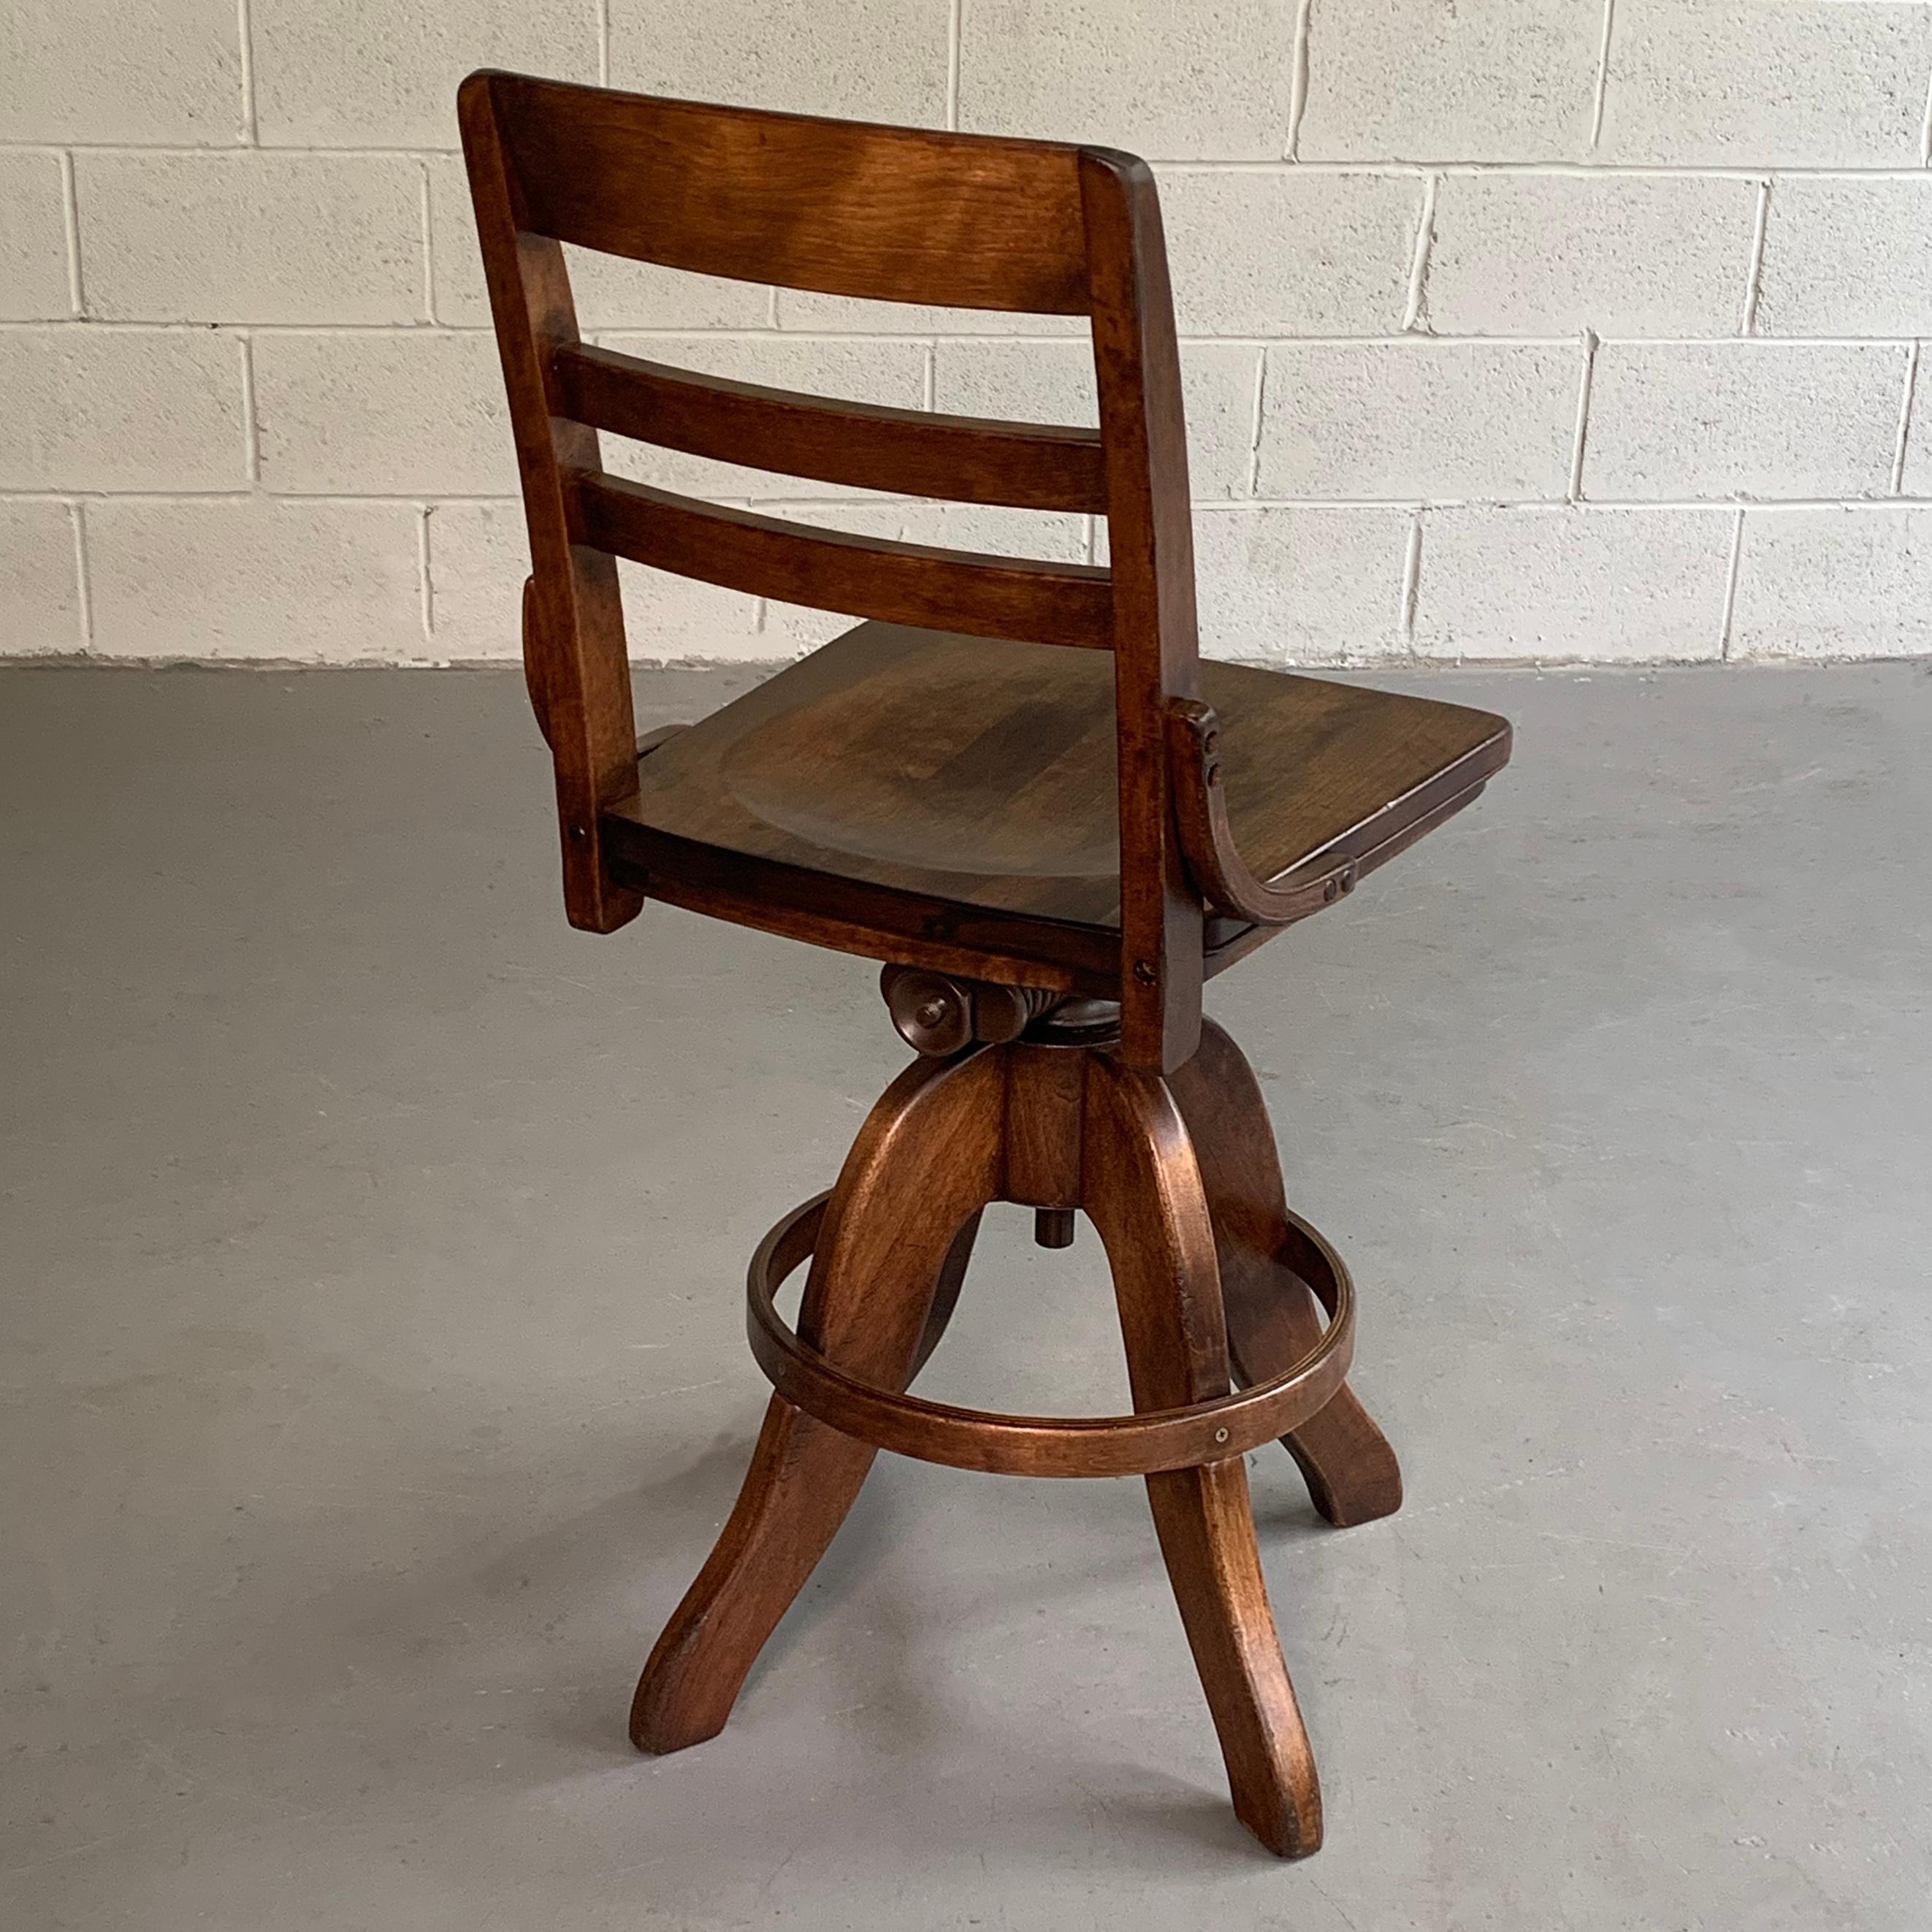 29 inch stool